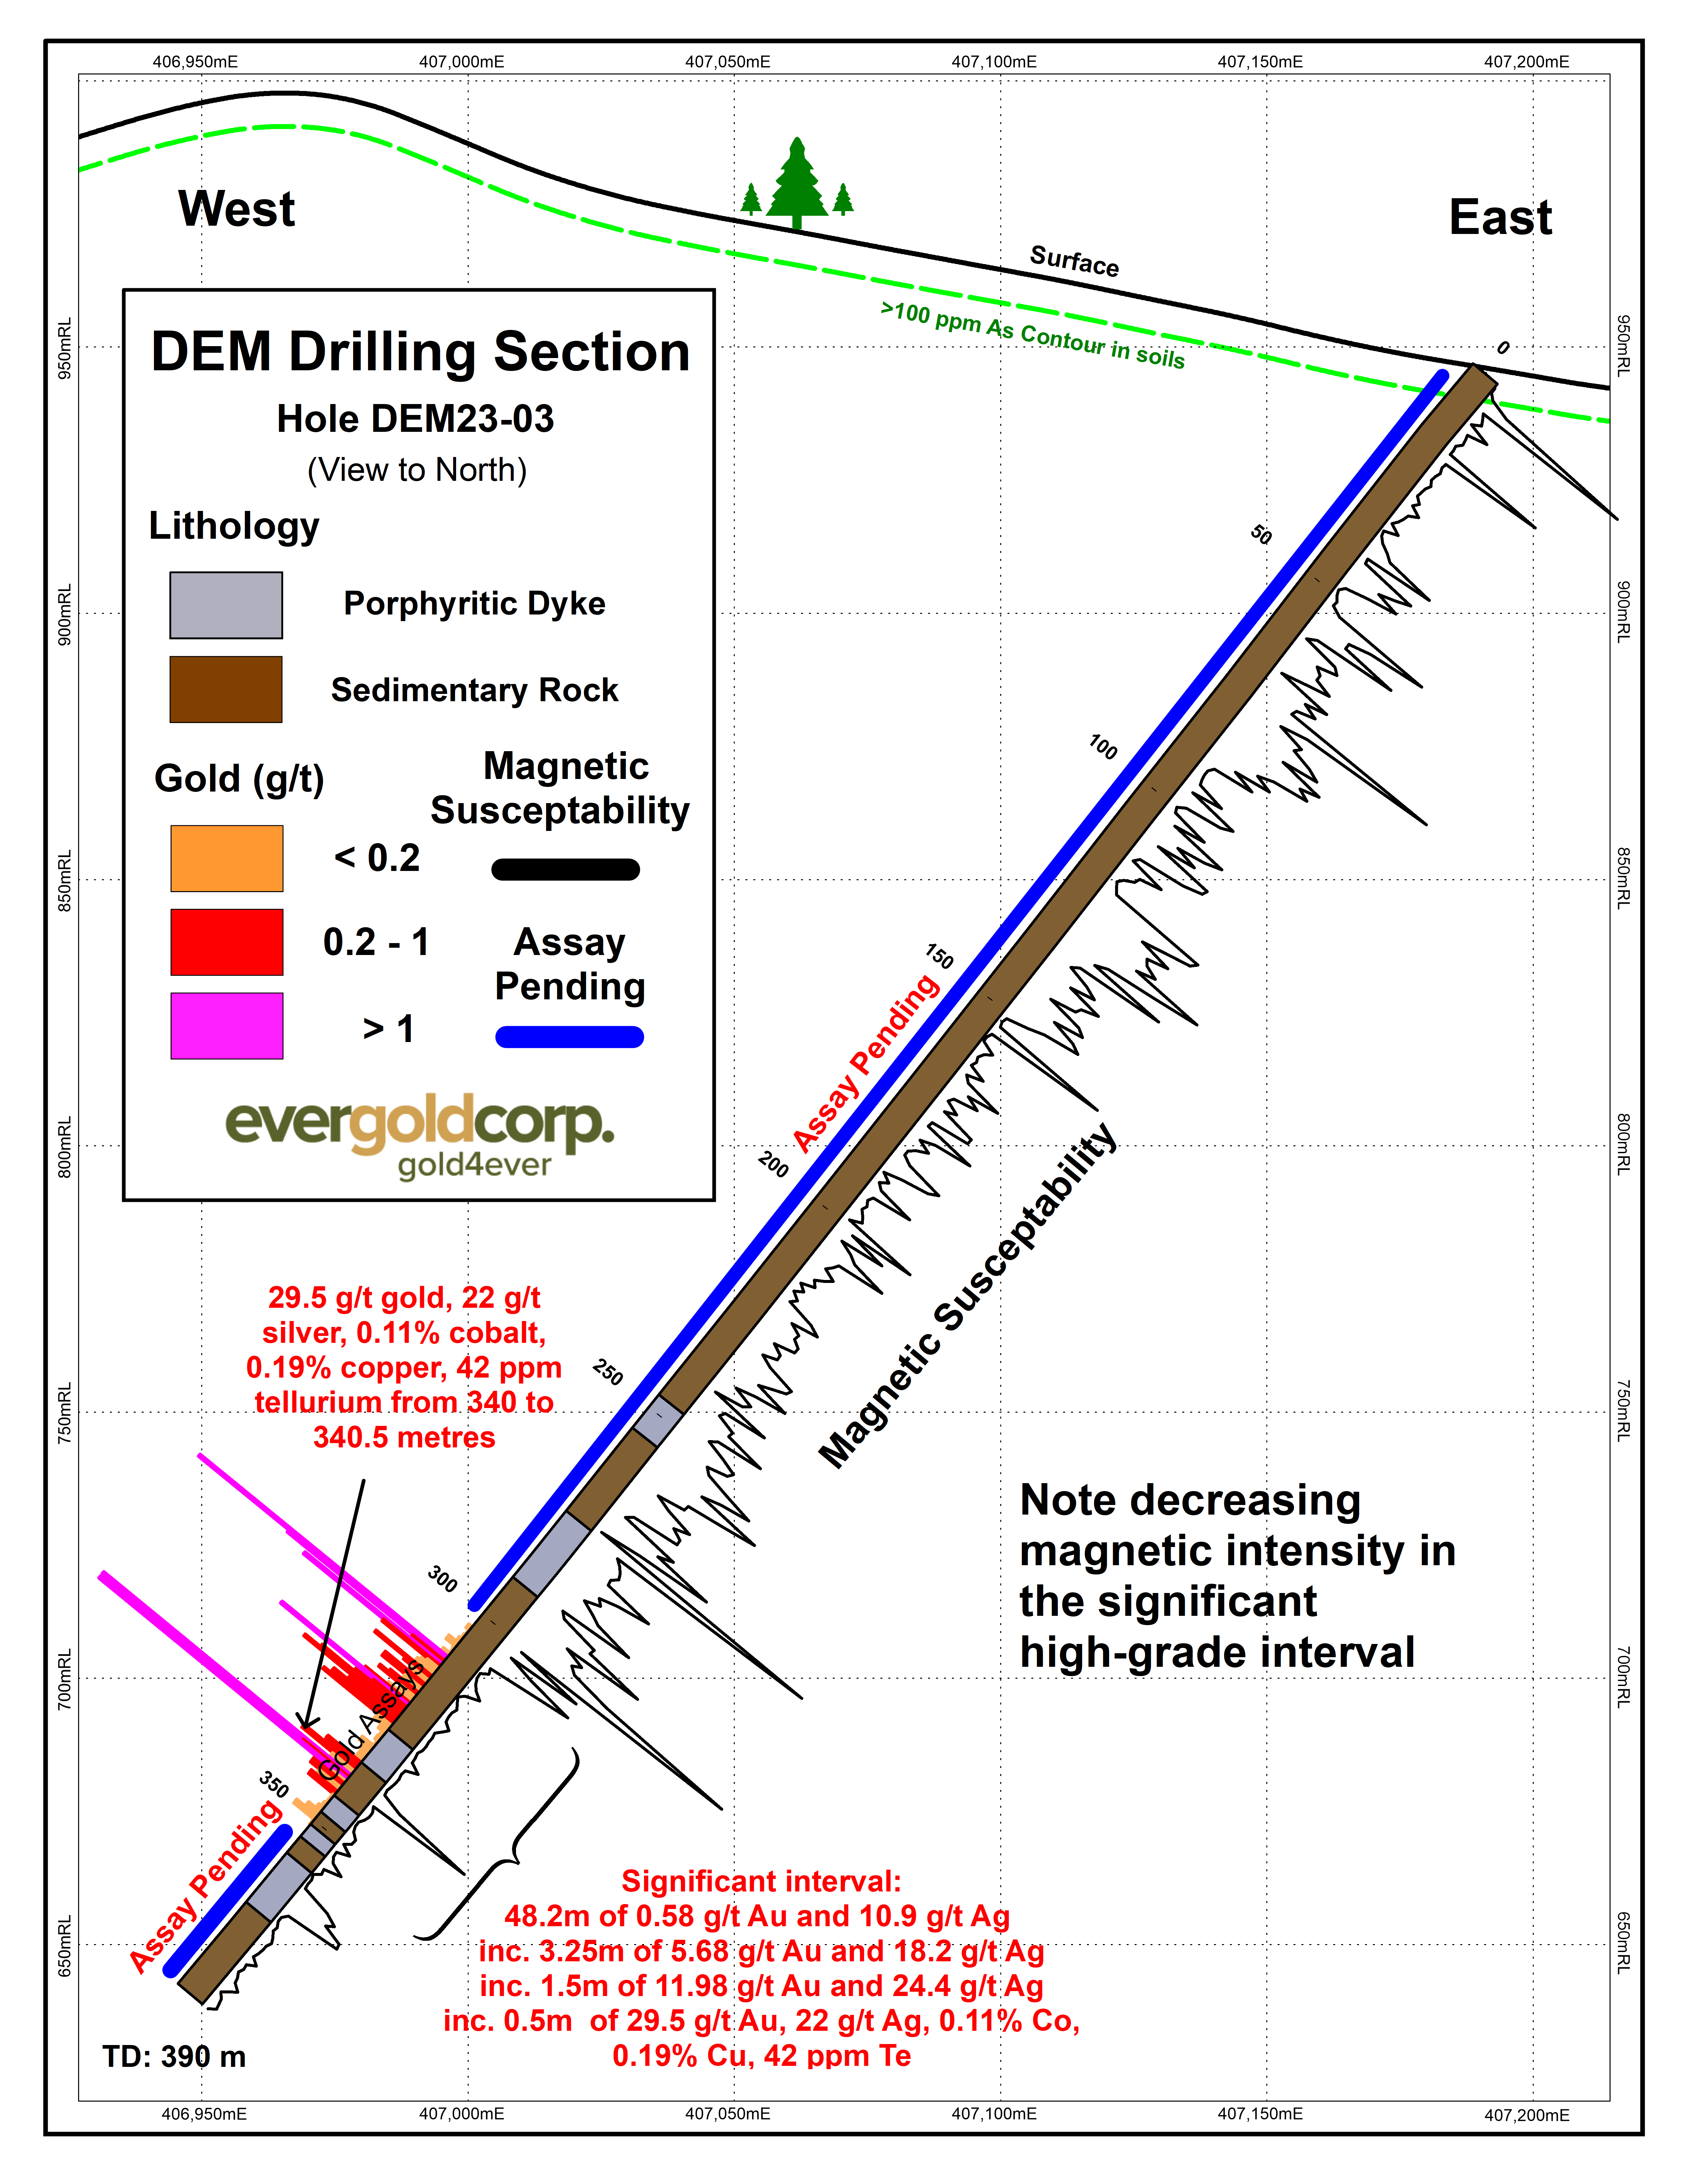 Figure 5 - DEM Drilling Section, Hole DEM23-03 Magnetic Susceptibility